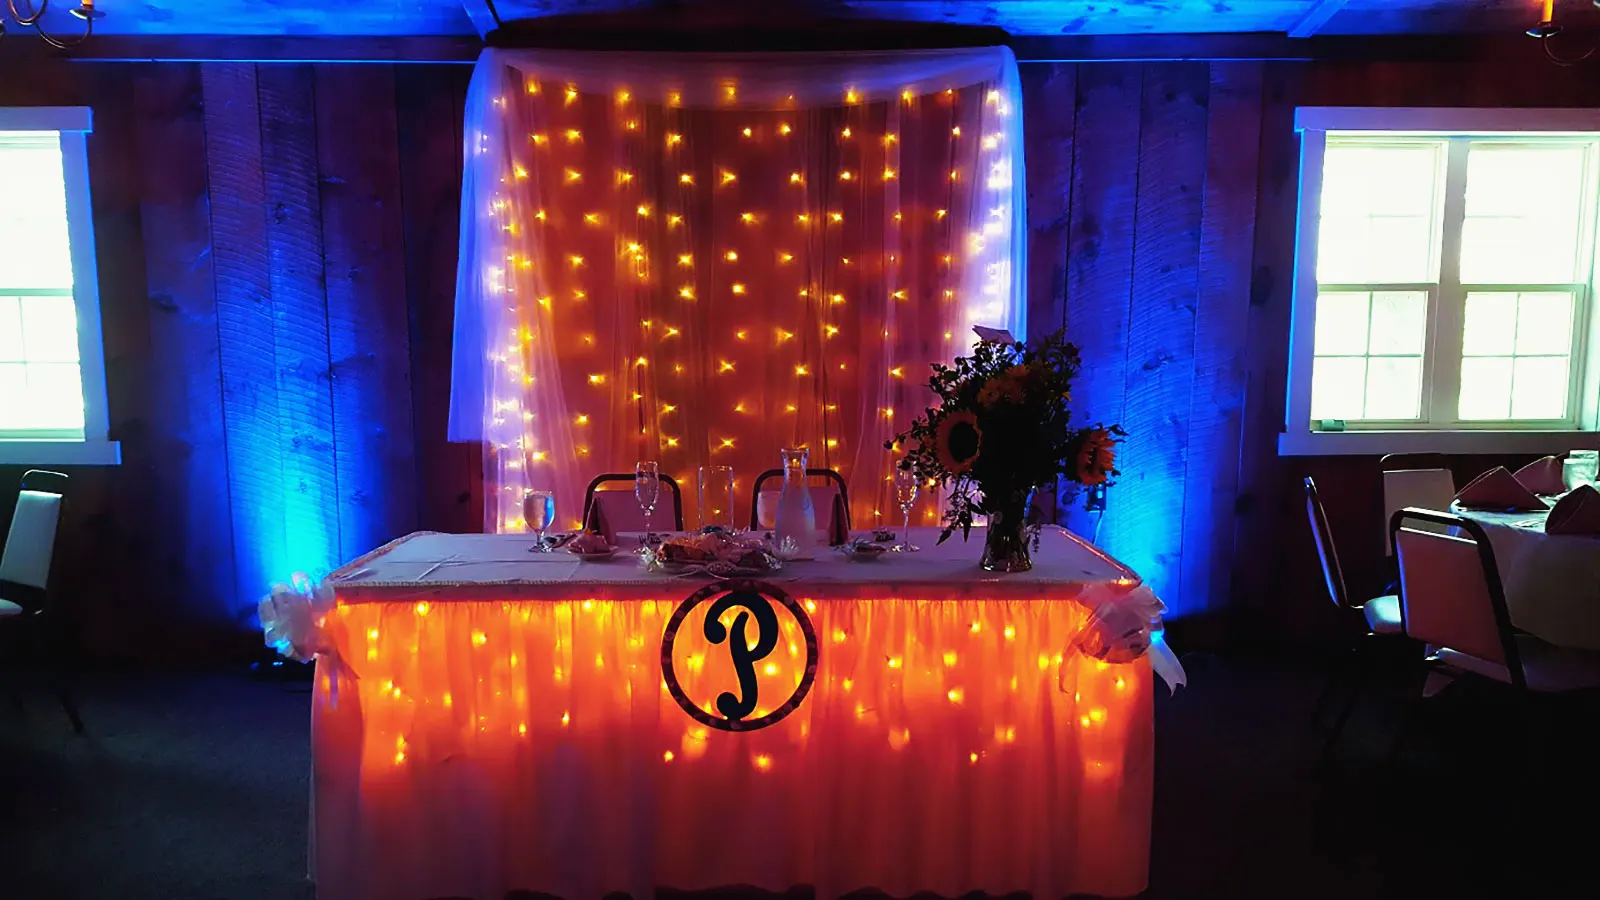 wedding table set up